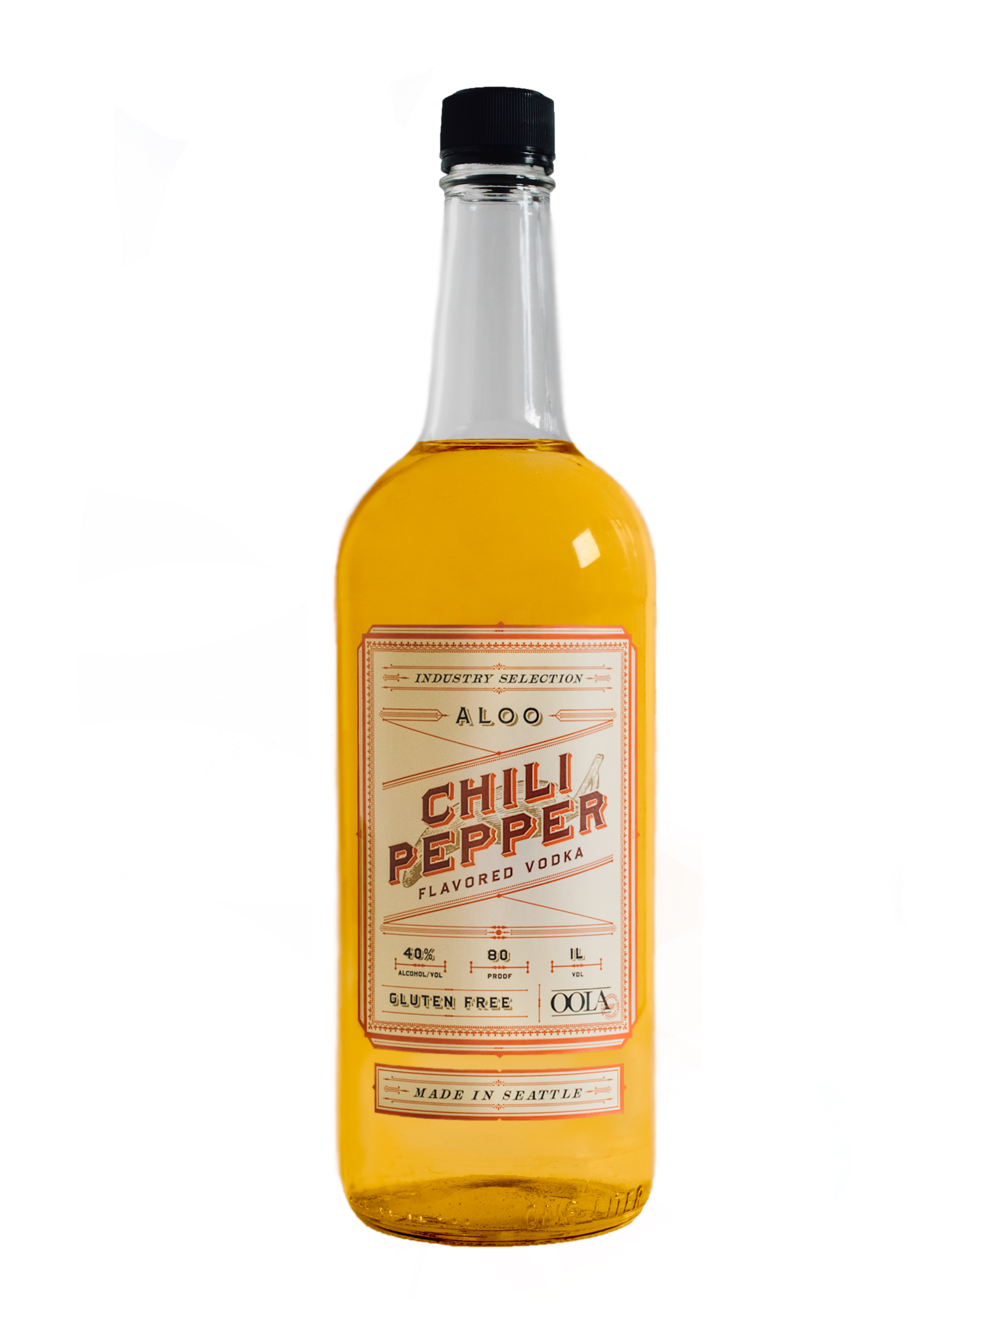 Aloo Chili Pepper Vodka Bottle Shot 2018 - Grain Whisky Clipart (1000x1333), Png Download